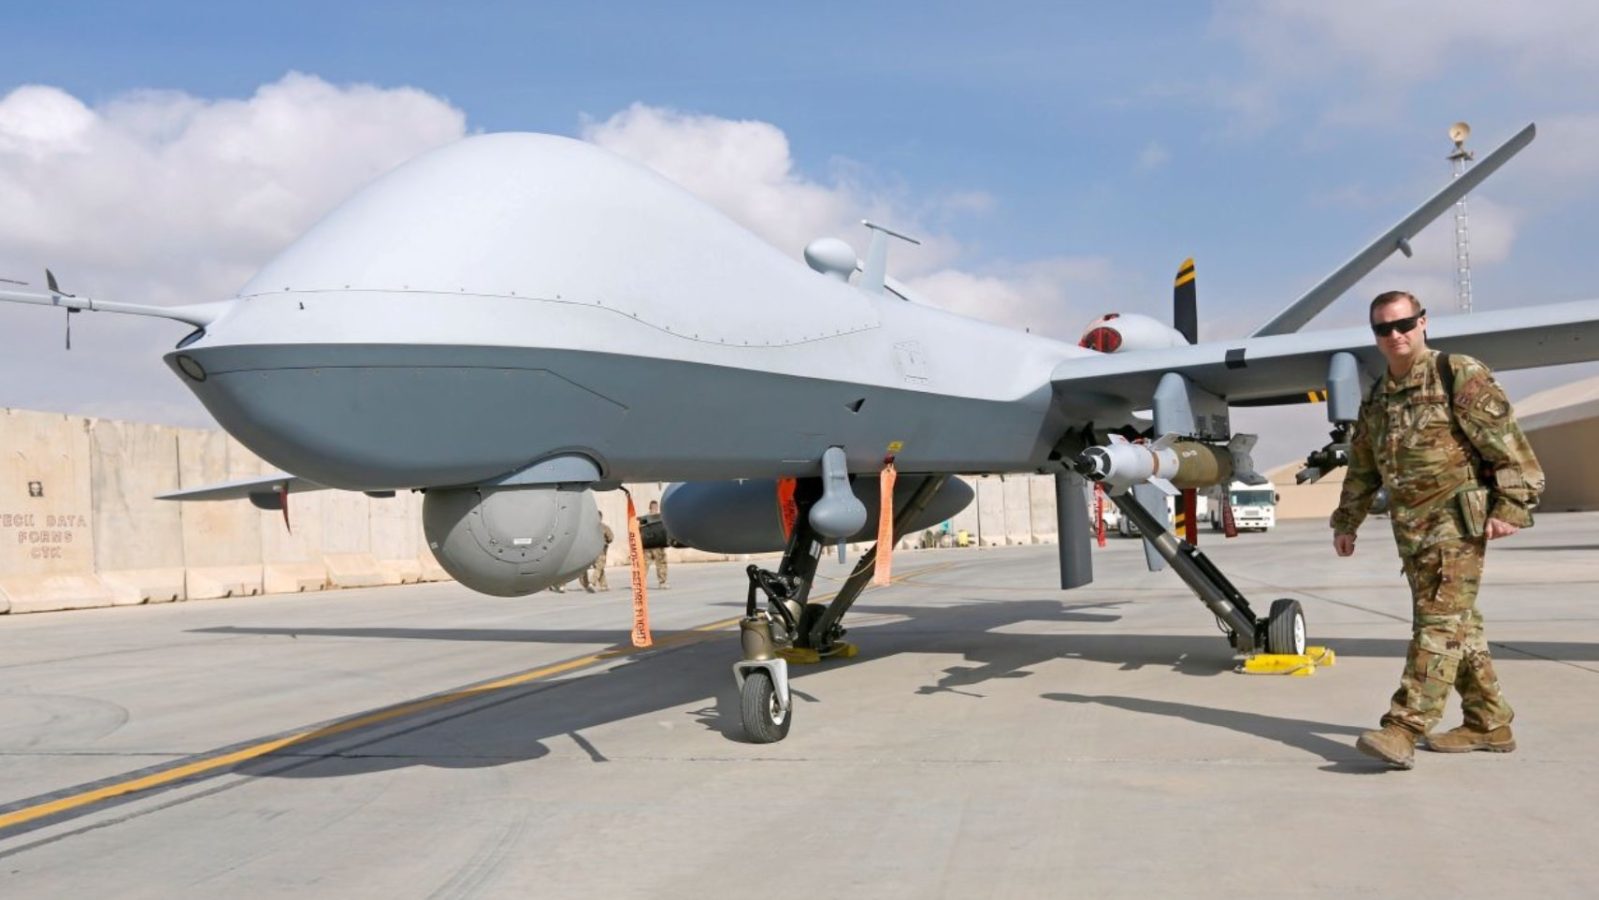 American drones to strengthen Australian military